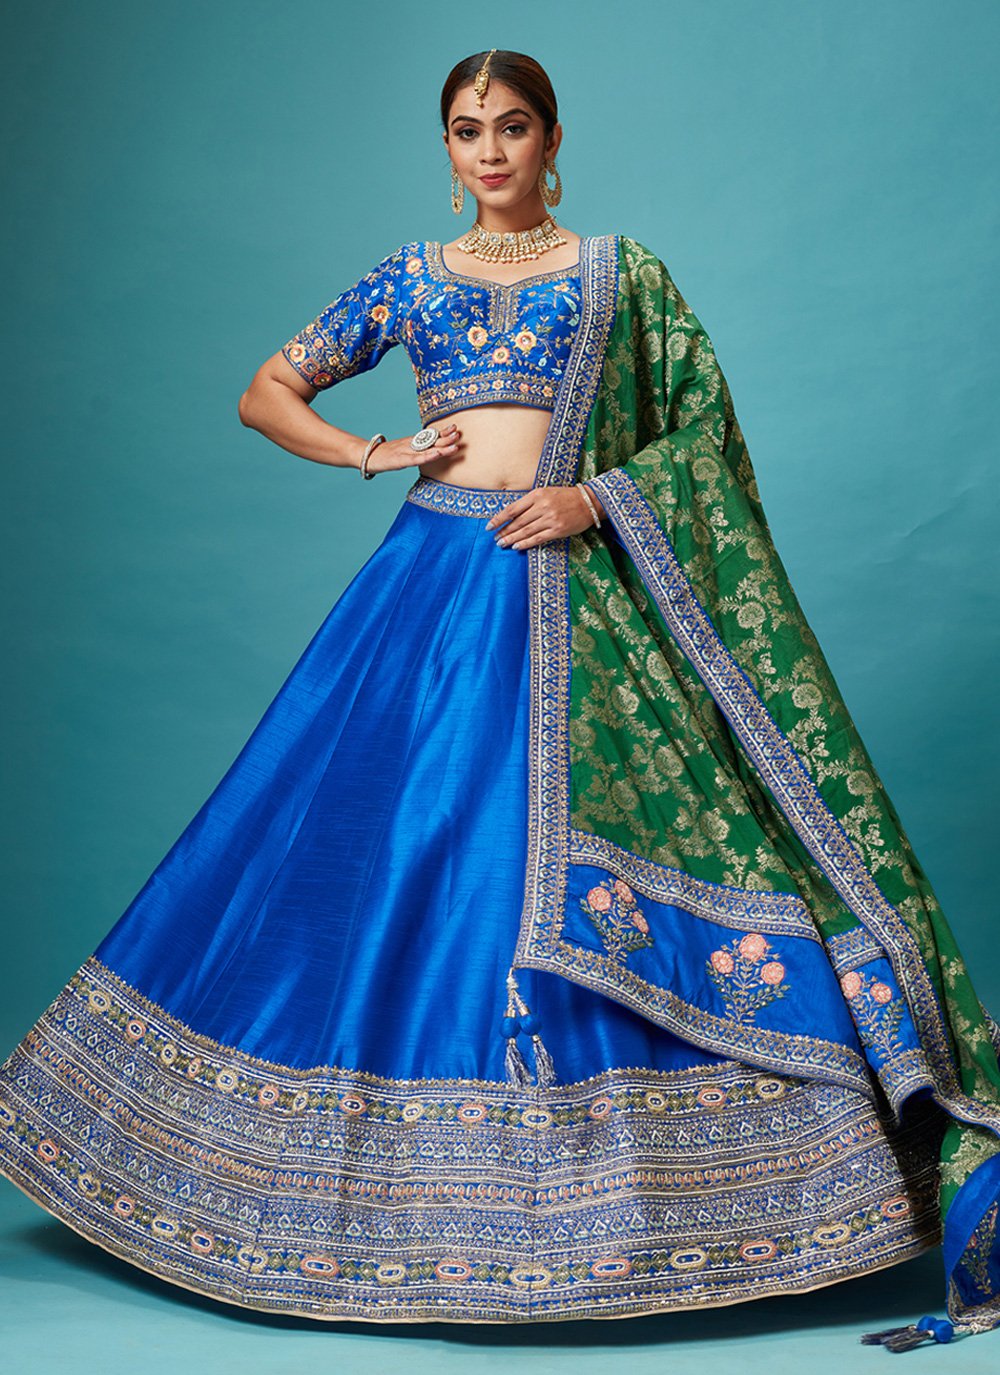 Budget Vs Expensive Lehenga: Chandni Chowk Designer Lehenga Market | Delhi  Wedding Shopping | Bridal - YouTube